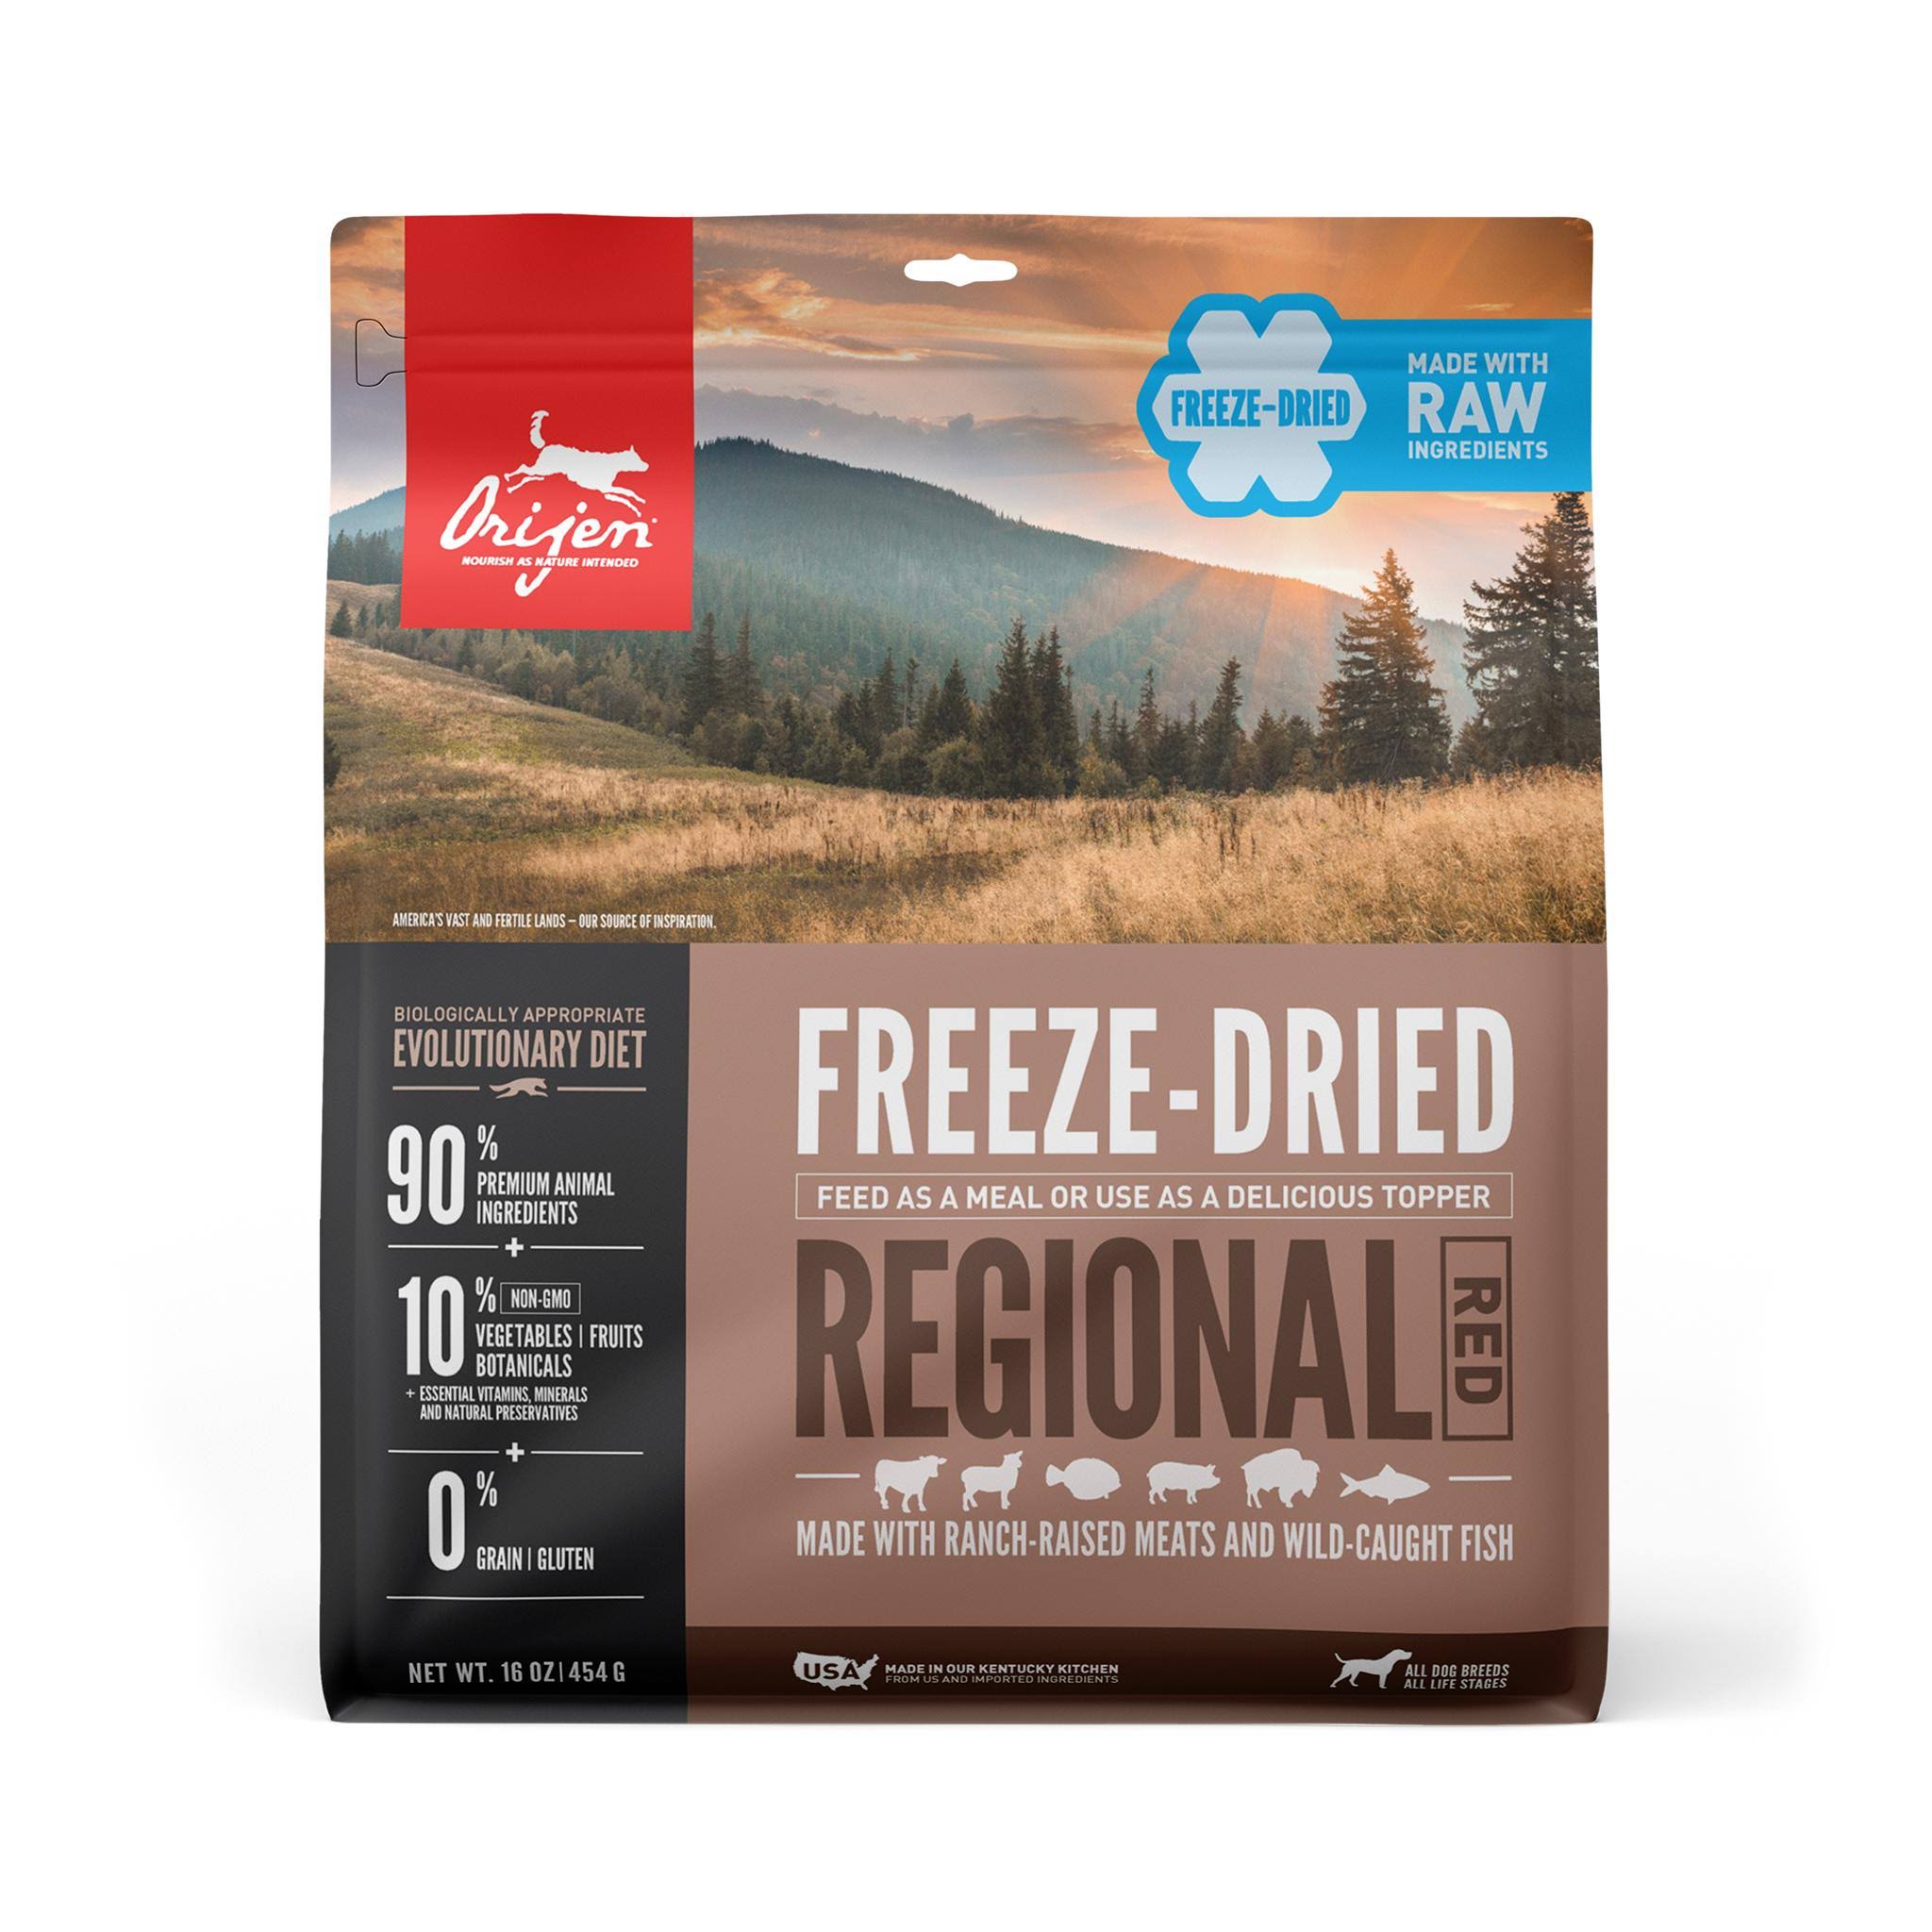 Orijen Freeze Dried Regional Red Dog Food, 16 oz